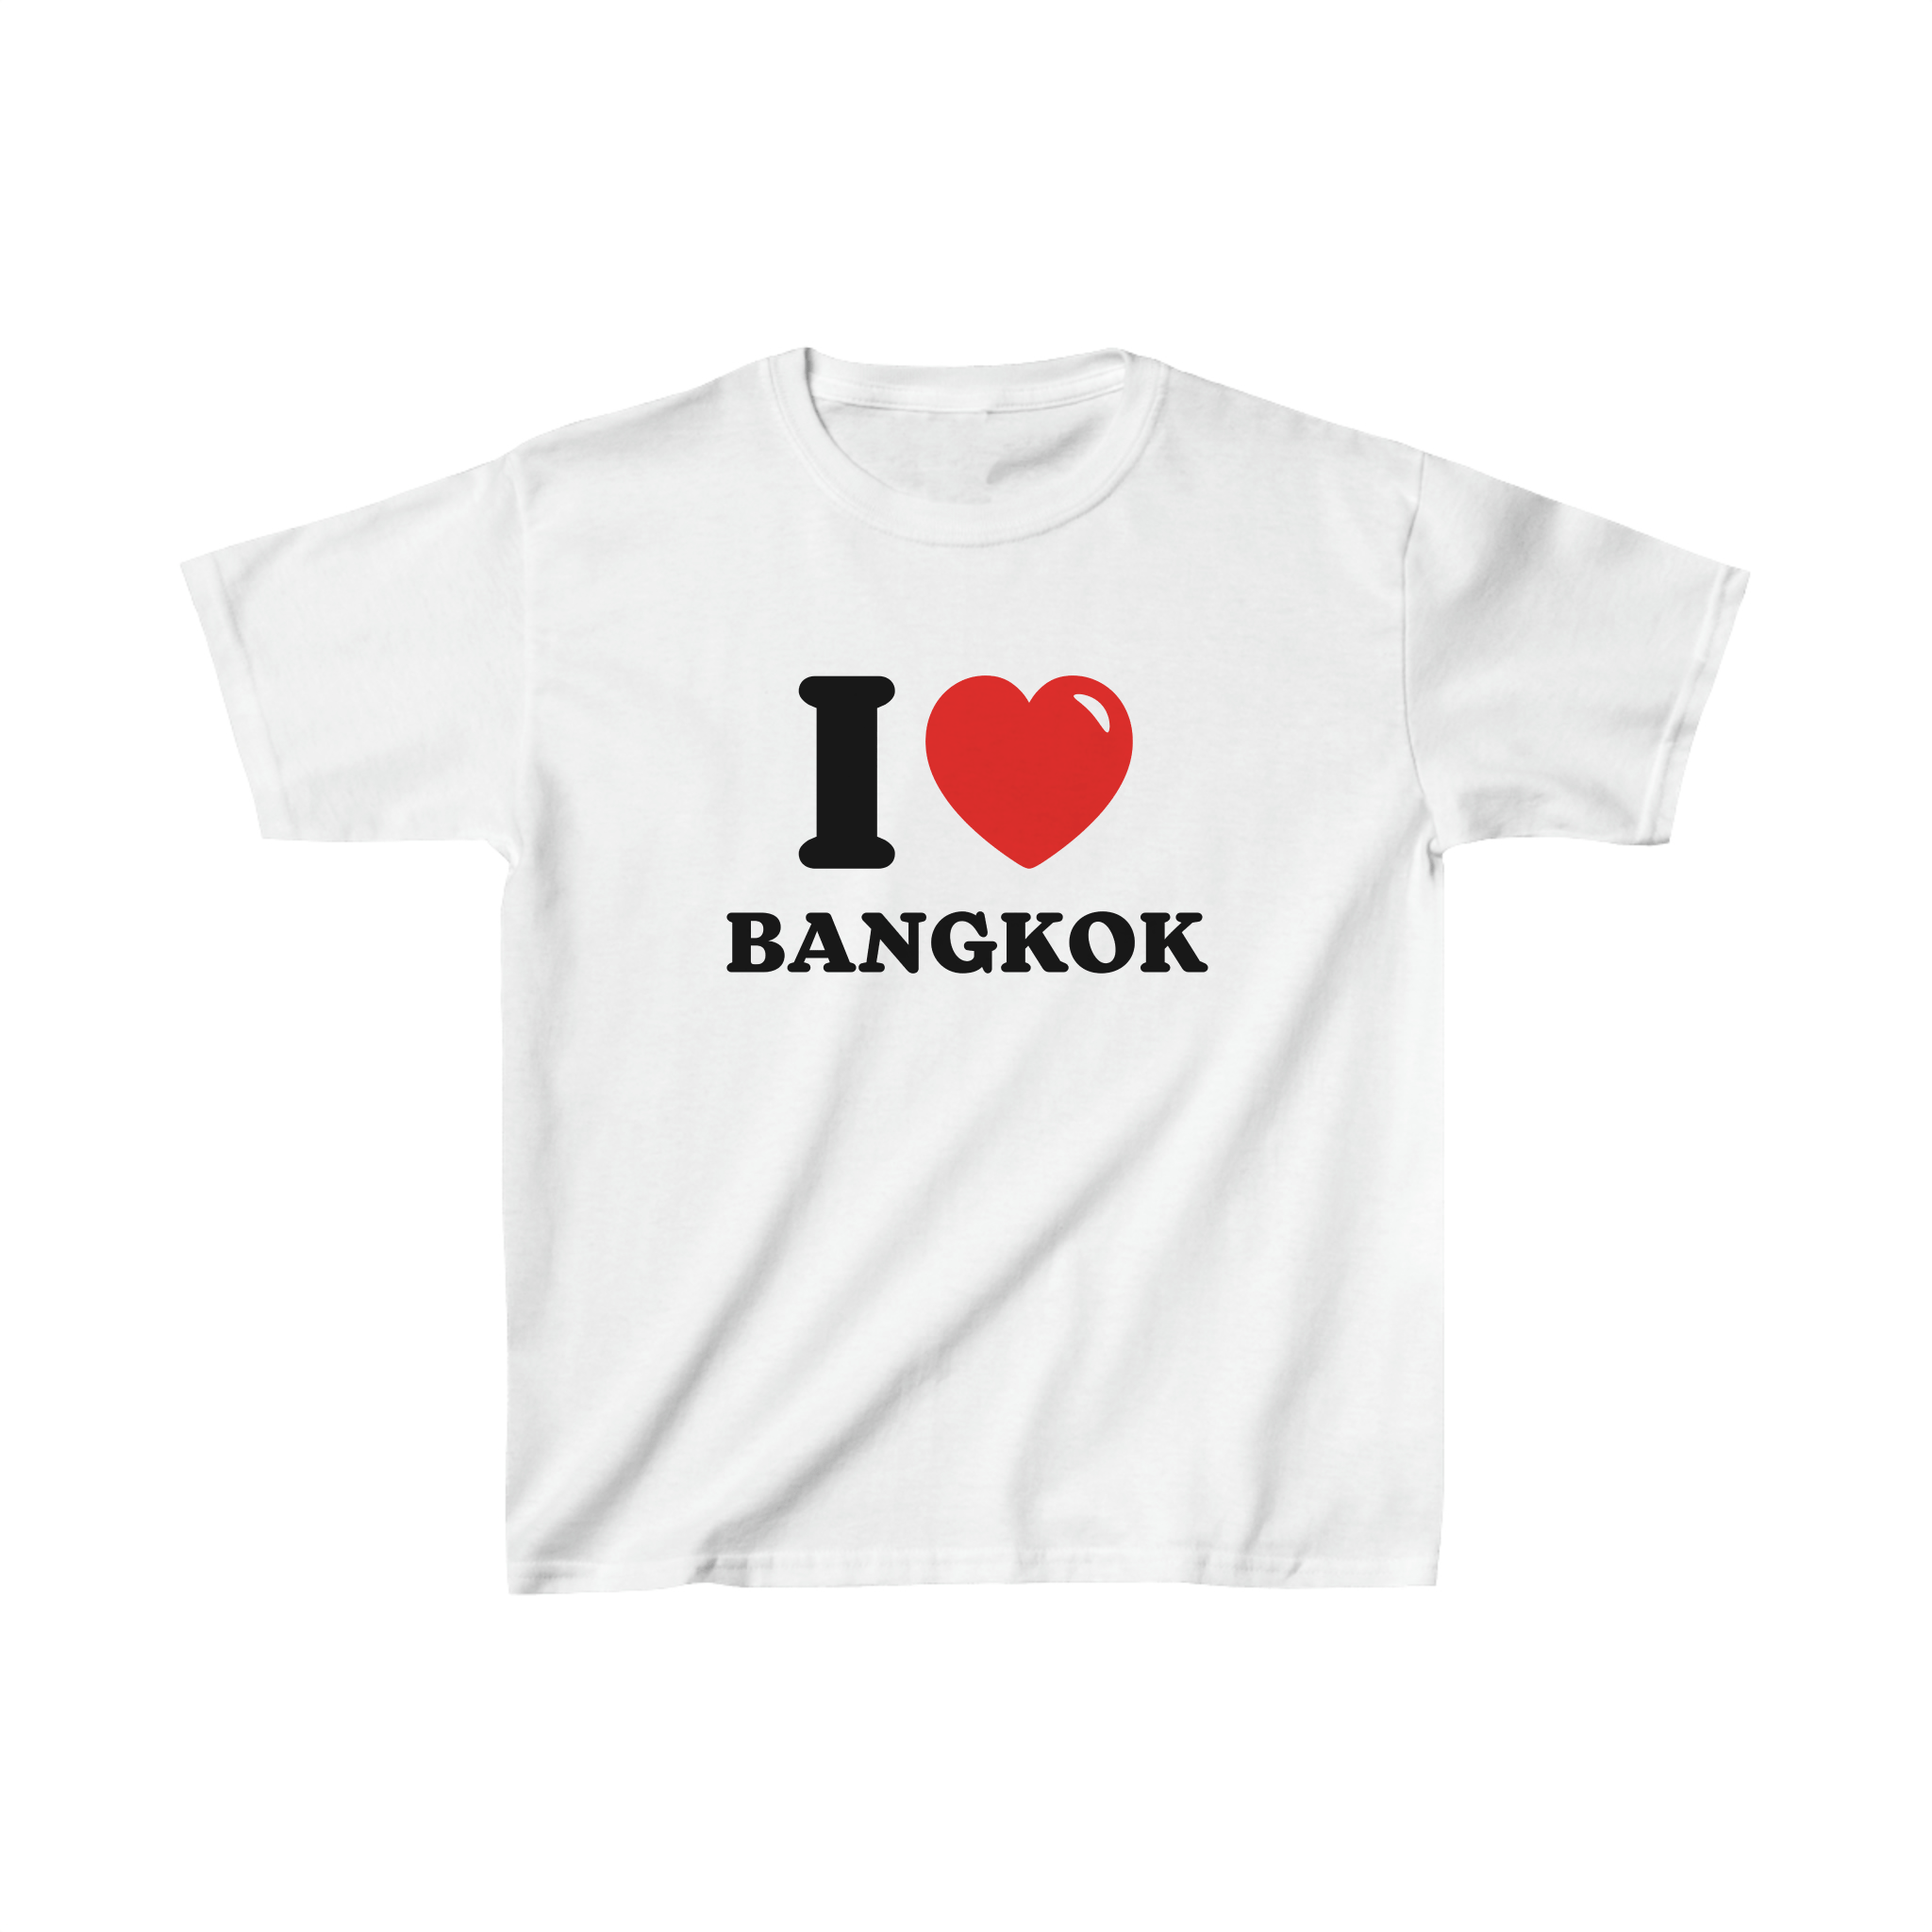 'I love Bangkok' baby tee - In Print We Trust